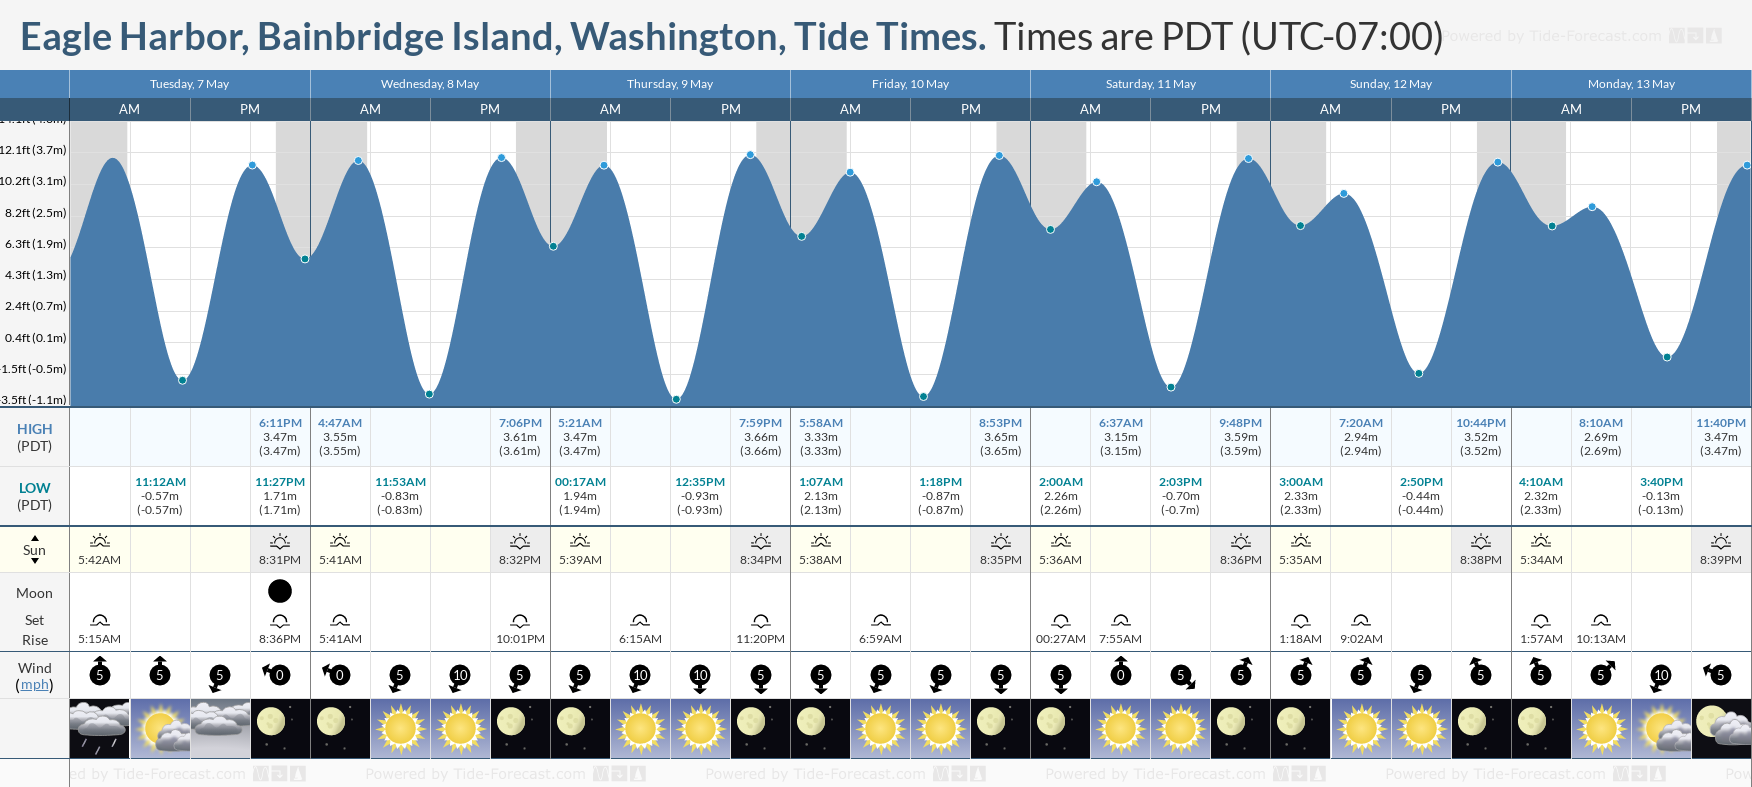 Eagle Harbor, Bainbridge Island, Washington Tide Chart including high and low tide tide times for the next 7 days